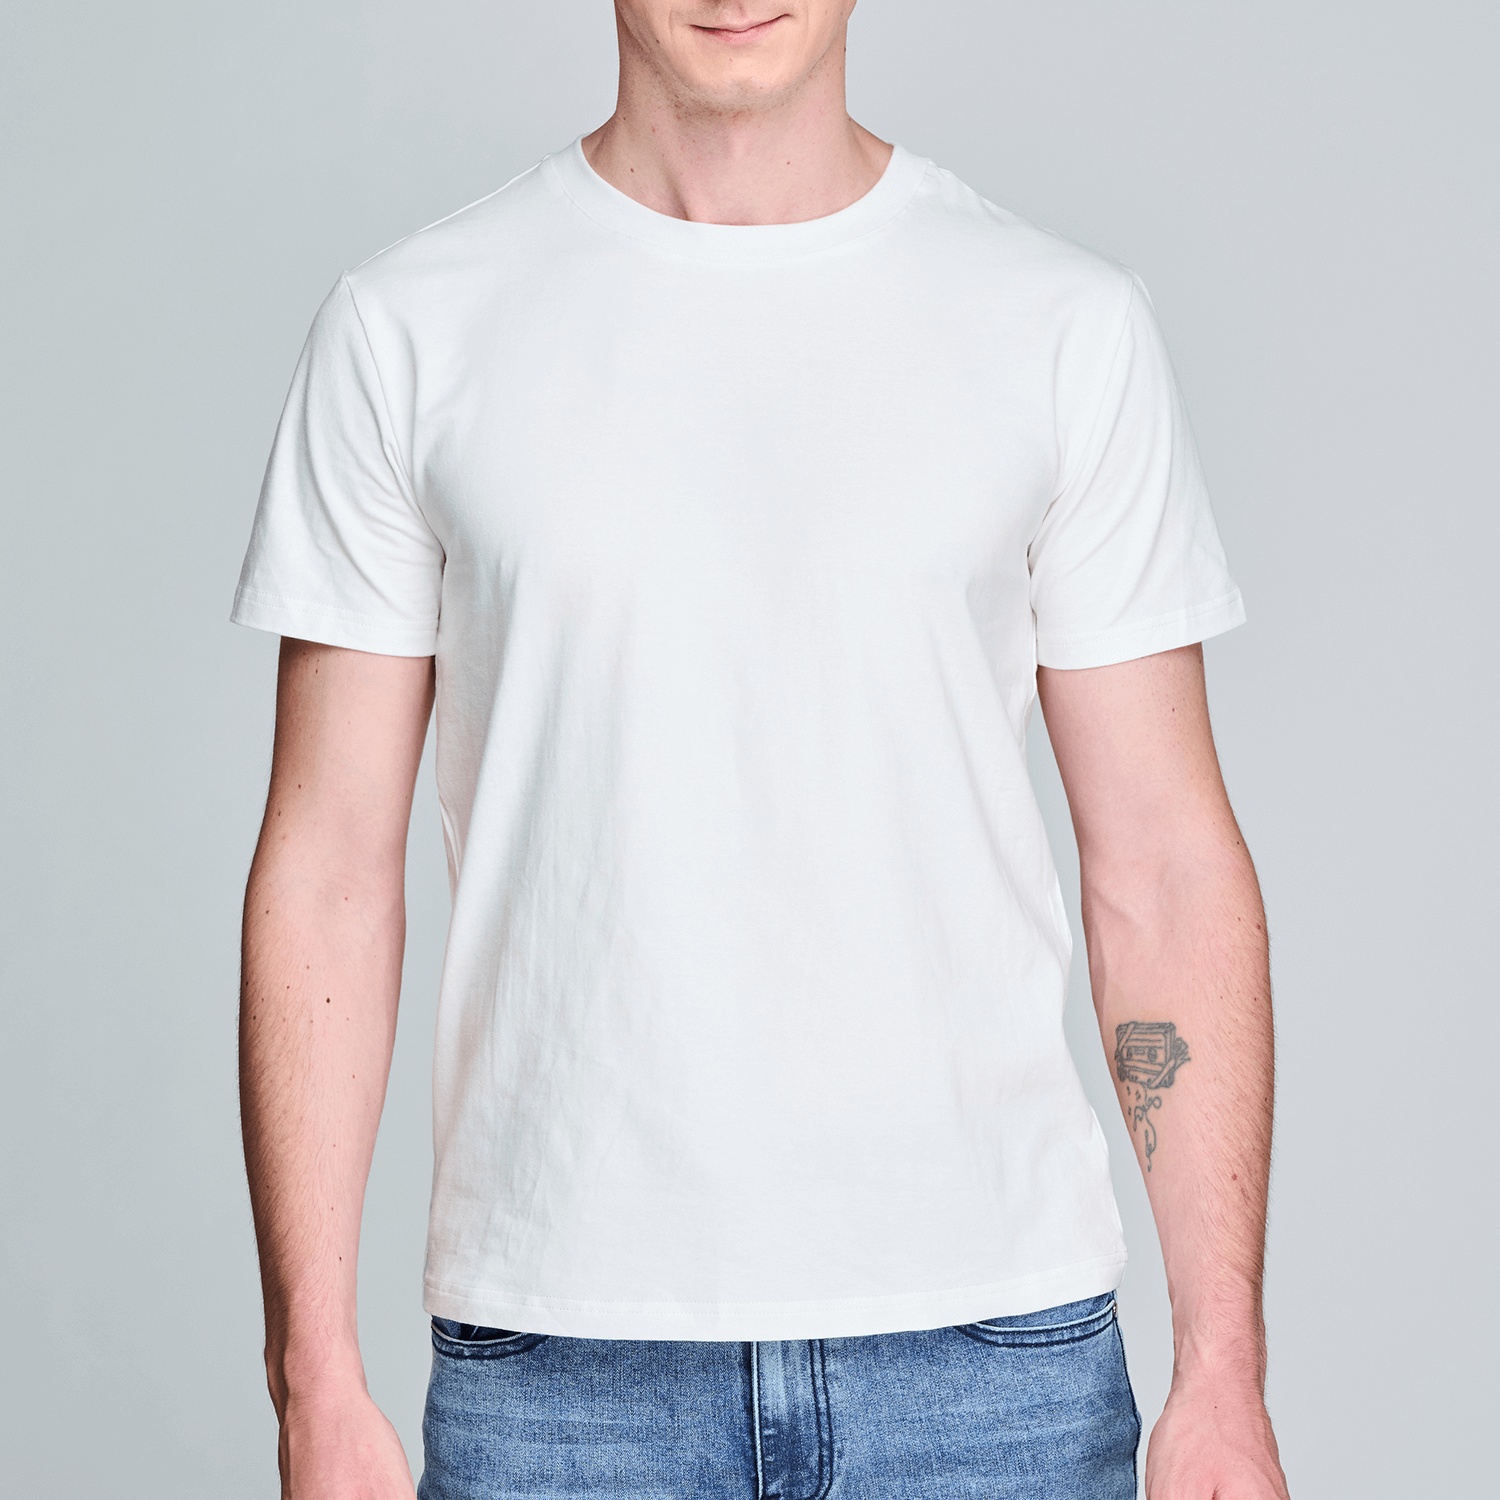 Unisex Classic Crew Neck Cotton T-Shirt. | blank